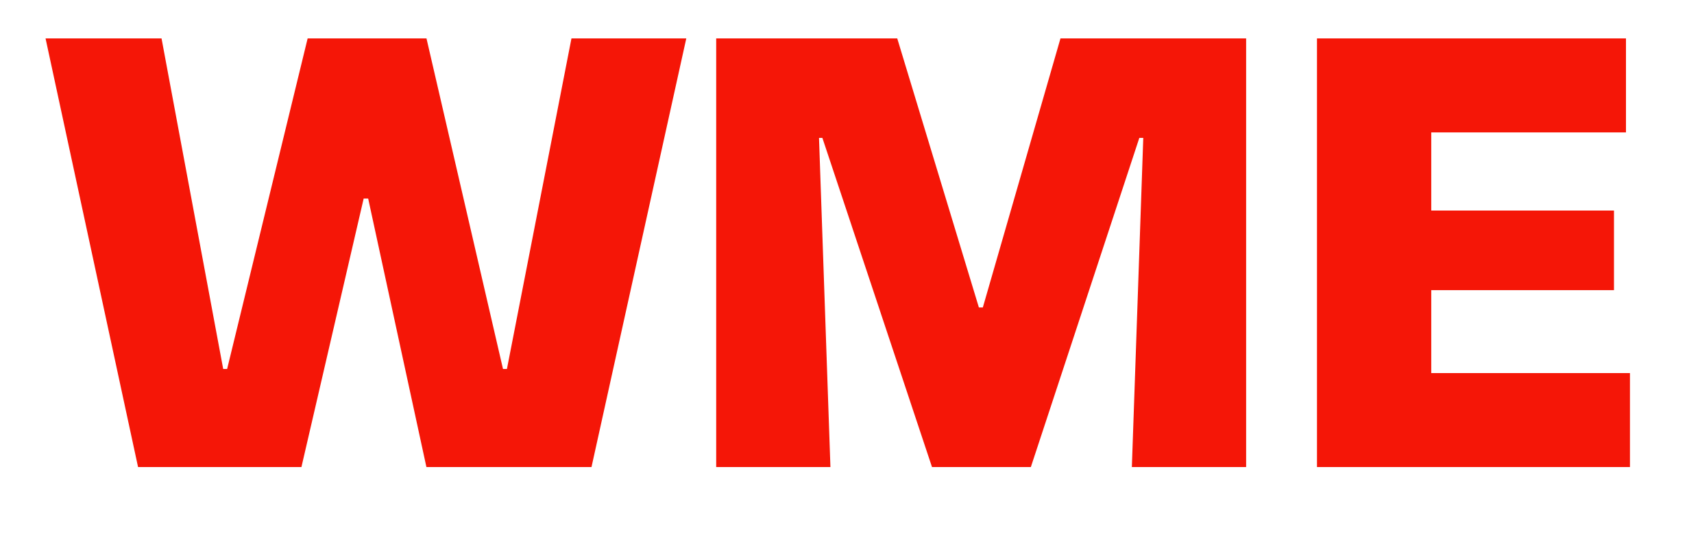 WME Logo - WME – Engineering The Future